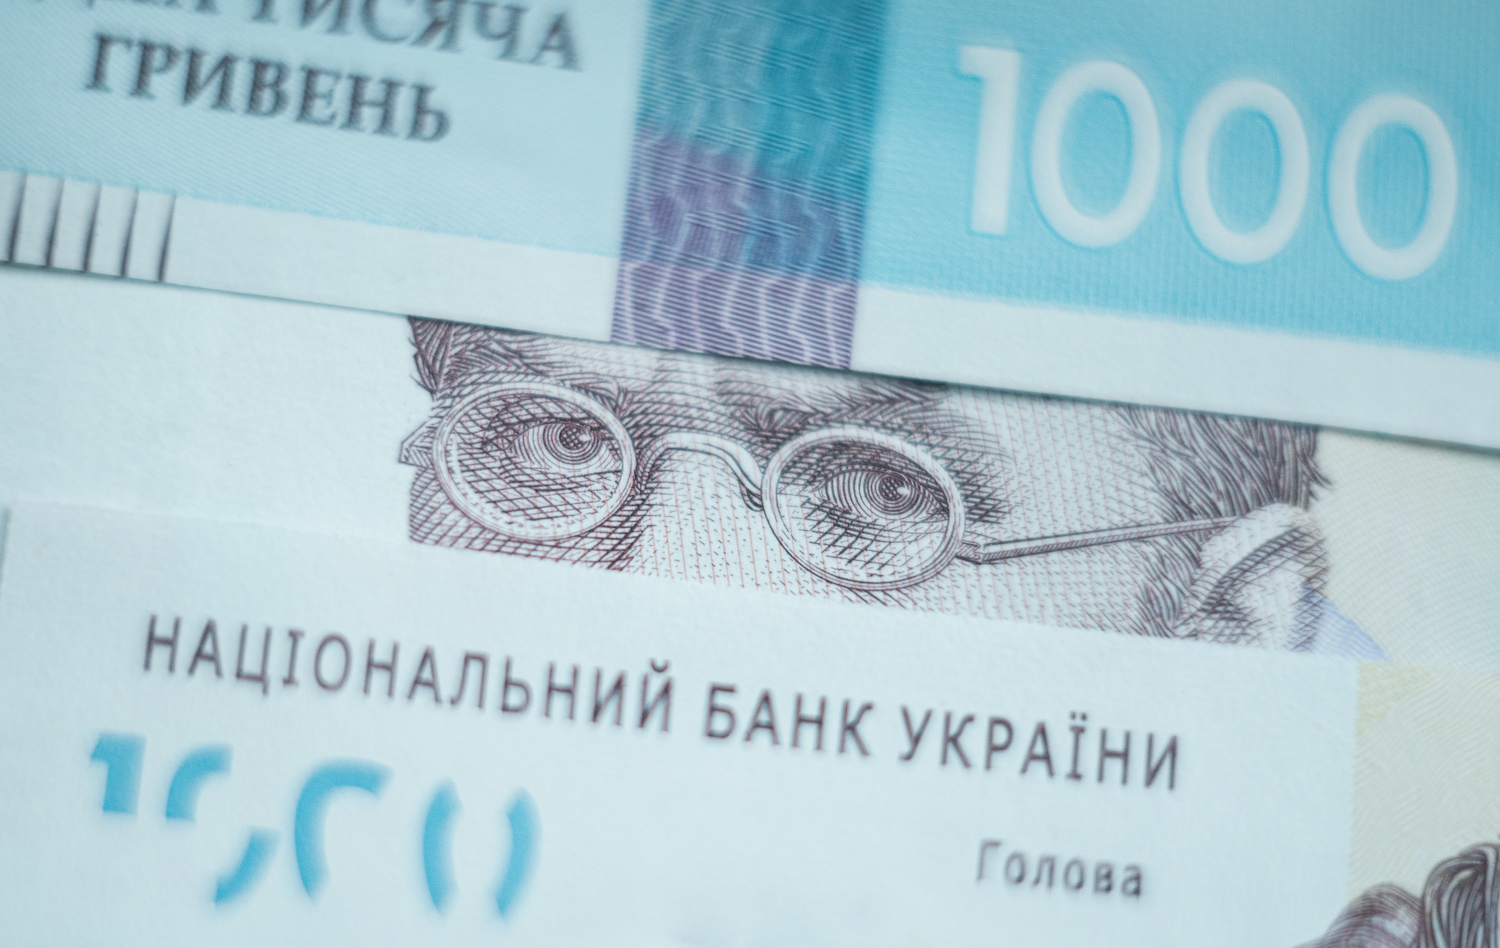 CRRMRH3O7FH5XKF2QICGMH227I - ممنوعیت خرید رمزارزها با ارز محلی توسط بانک مرکزی اوکراین